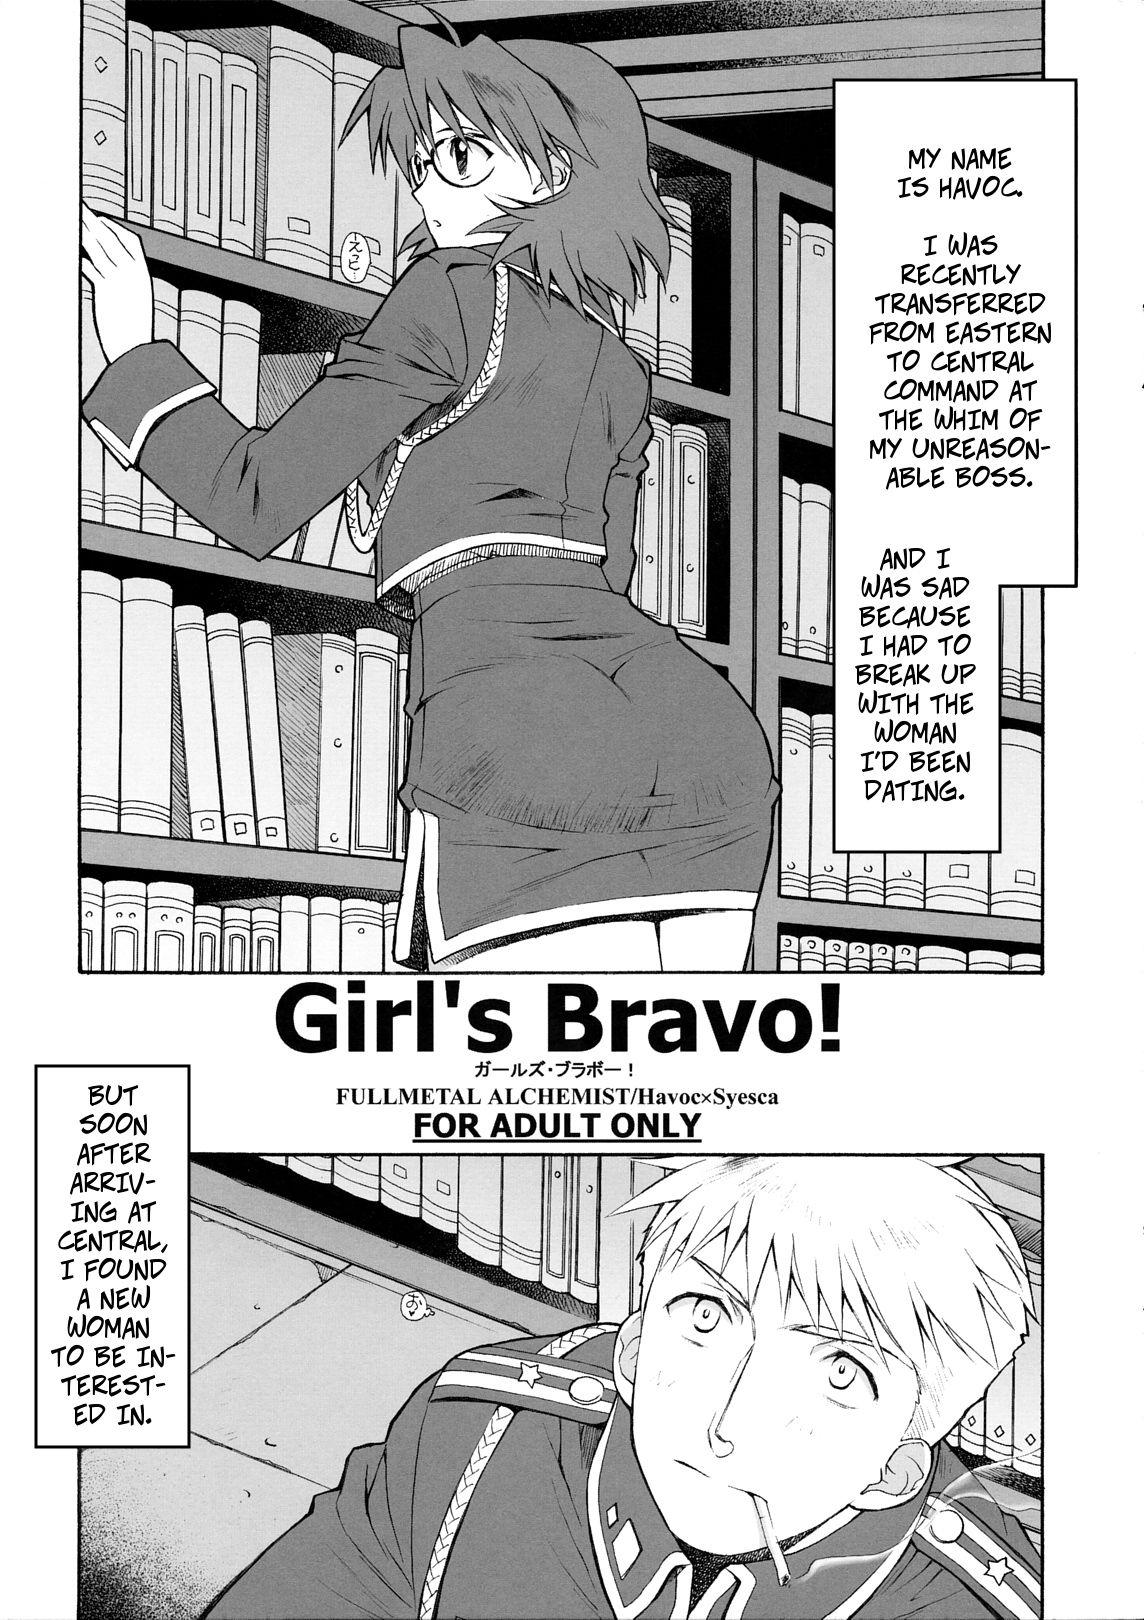 Home Girl's Bravo! - Fullmetal alchemist Ametuer Porn - Picture 1